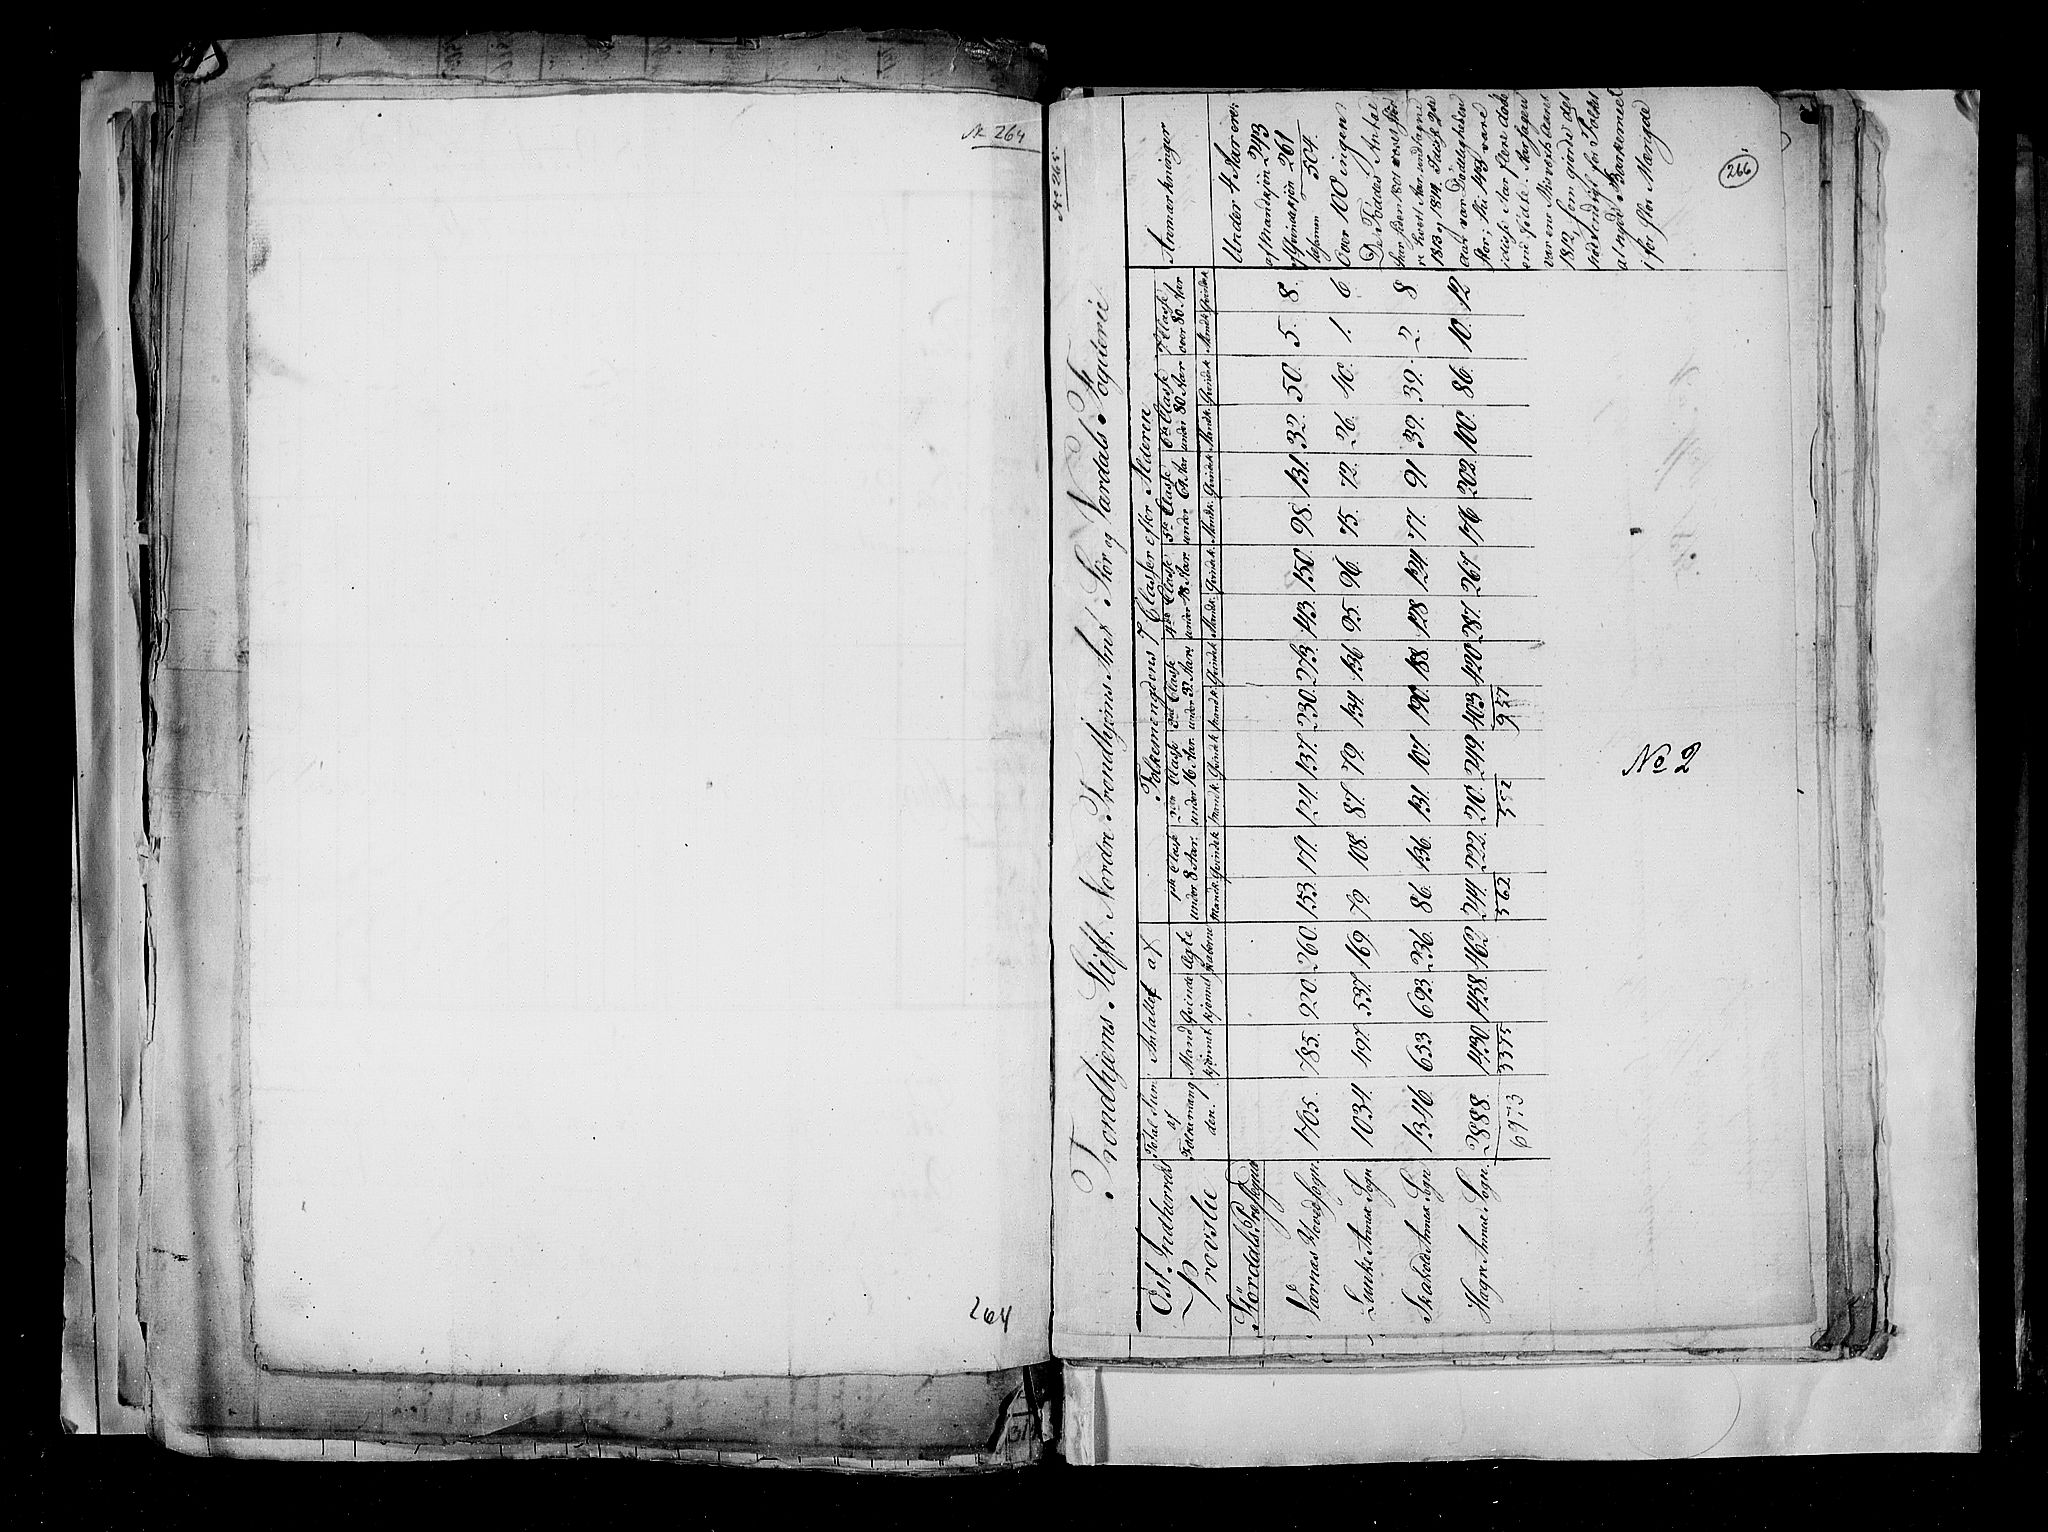 RA, Census 1815, vol. 2: Bergen stift and Trondheim stift, 1815, p. 166